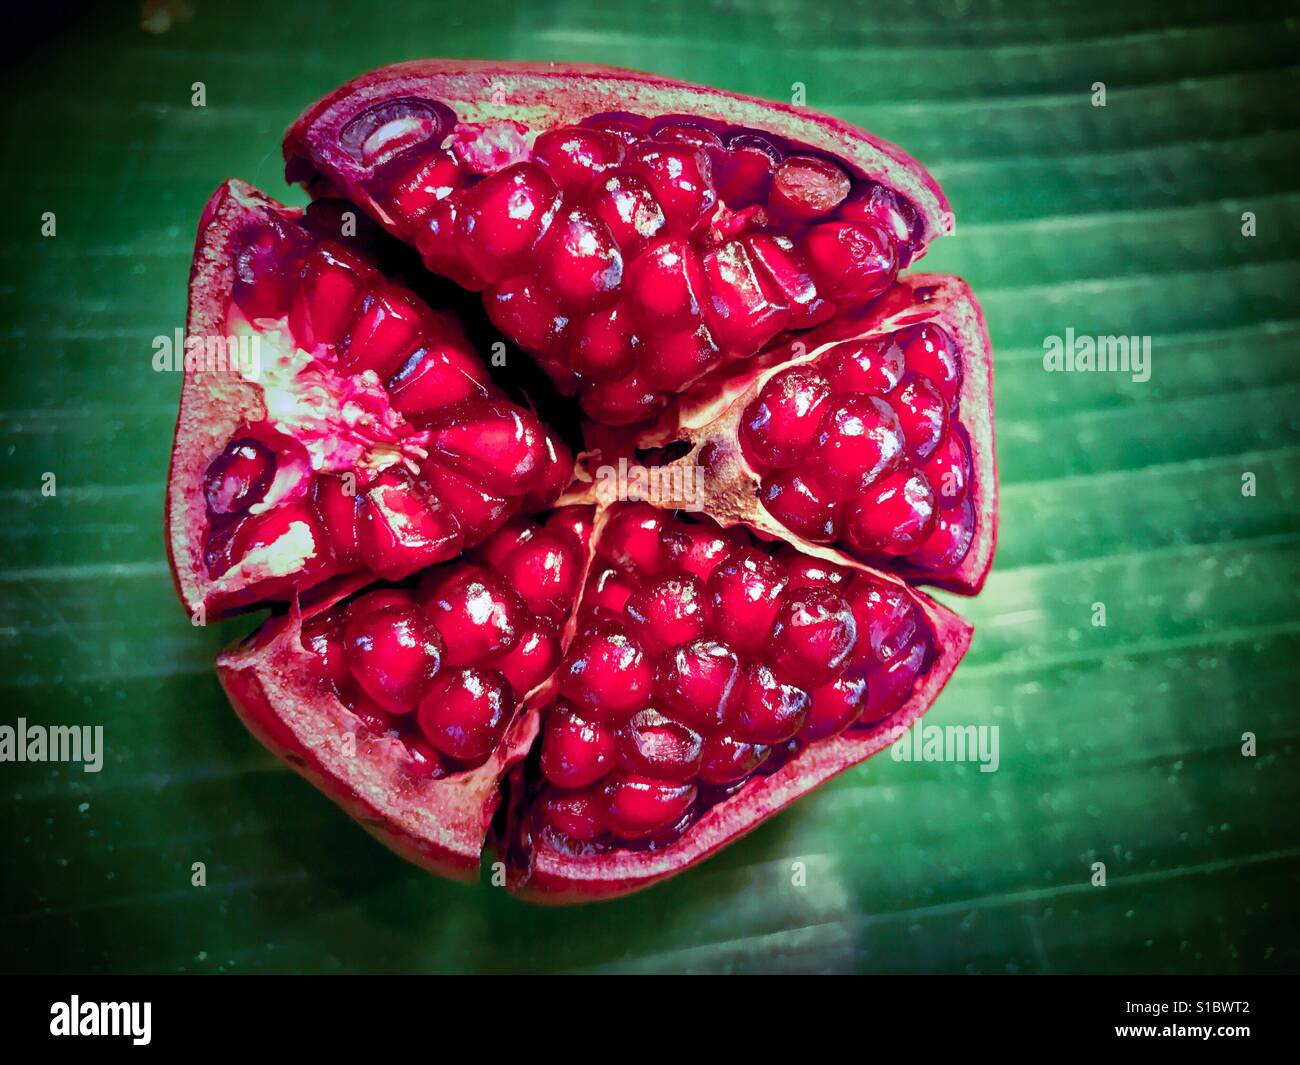 Red ripe pomegranate, (Punica granatum) on banana leaf background Stock Photo